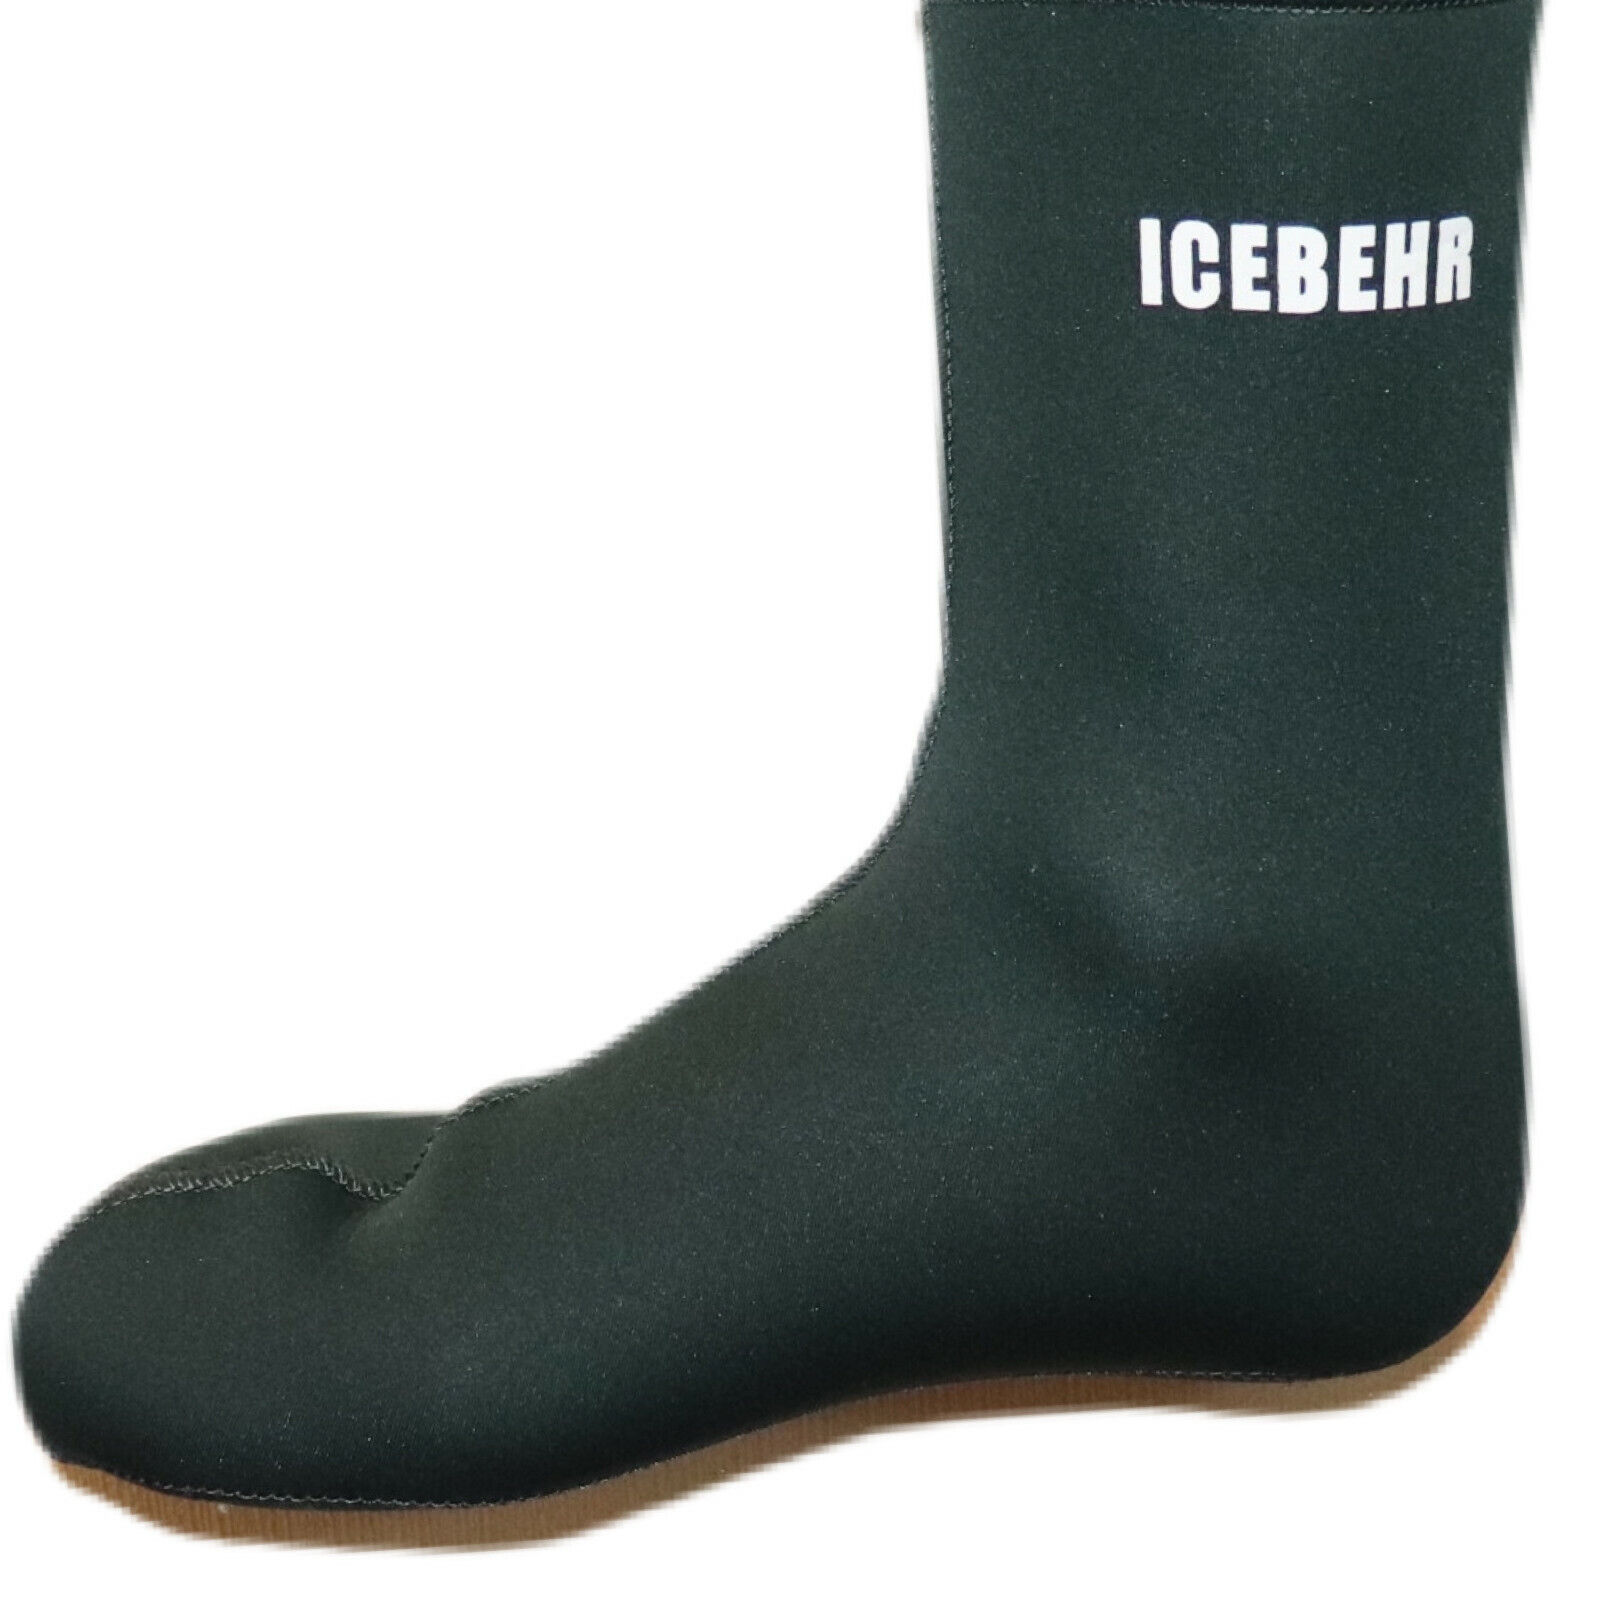 ICE BEHR Titanium Neopren-Socken (kurz Gr. XL (45-47))